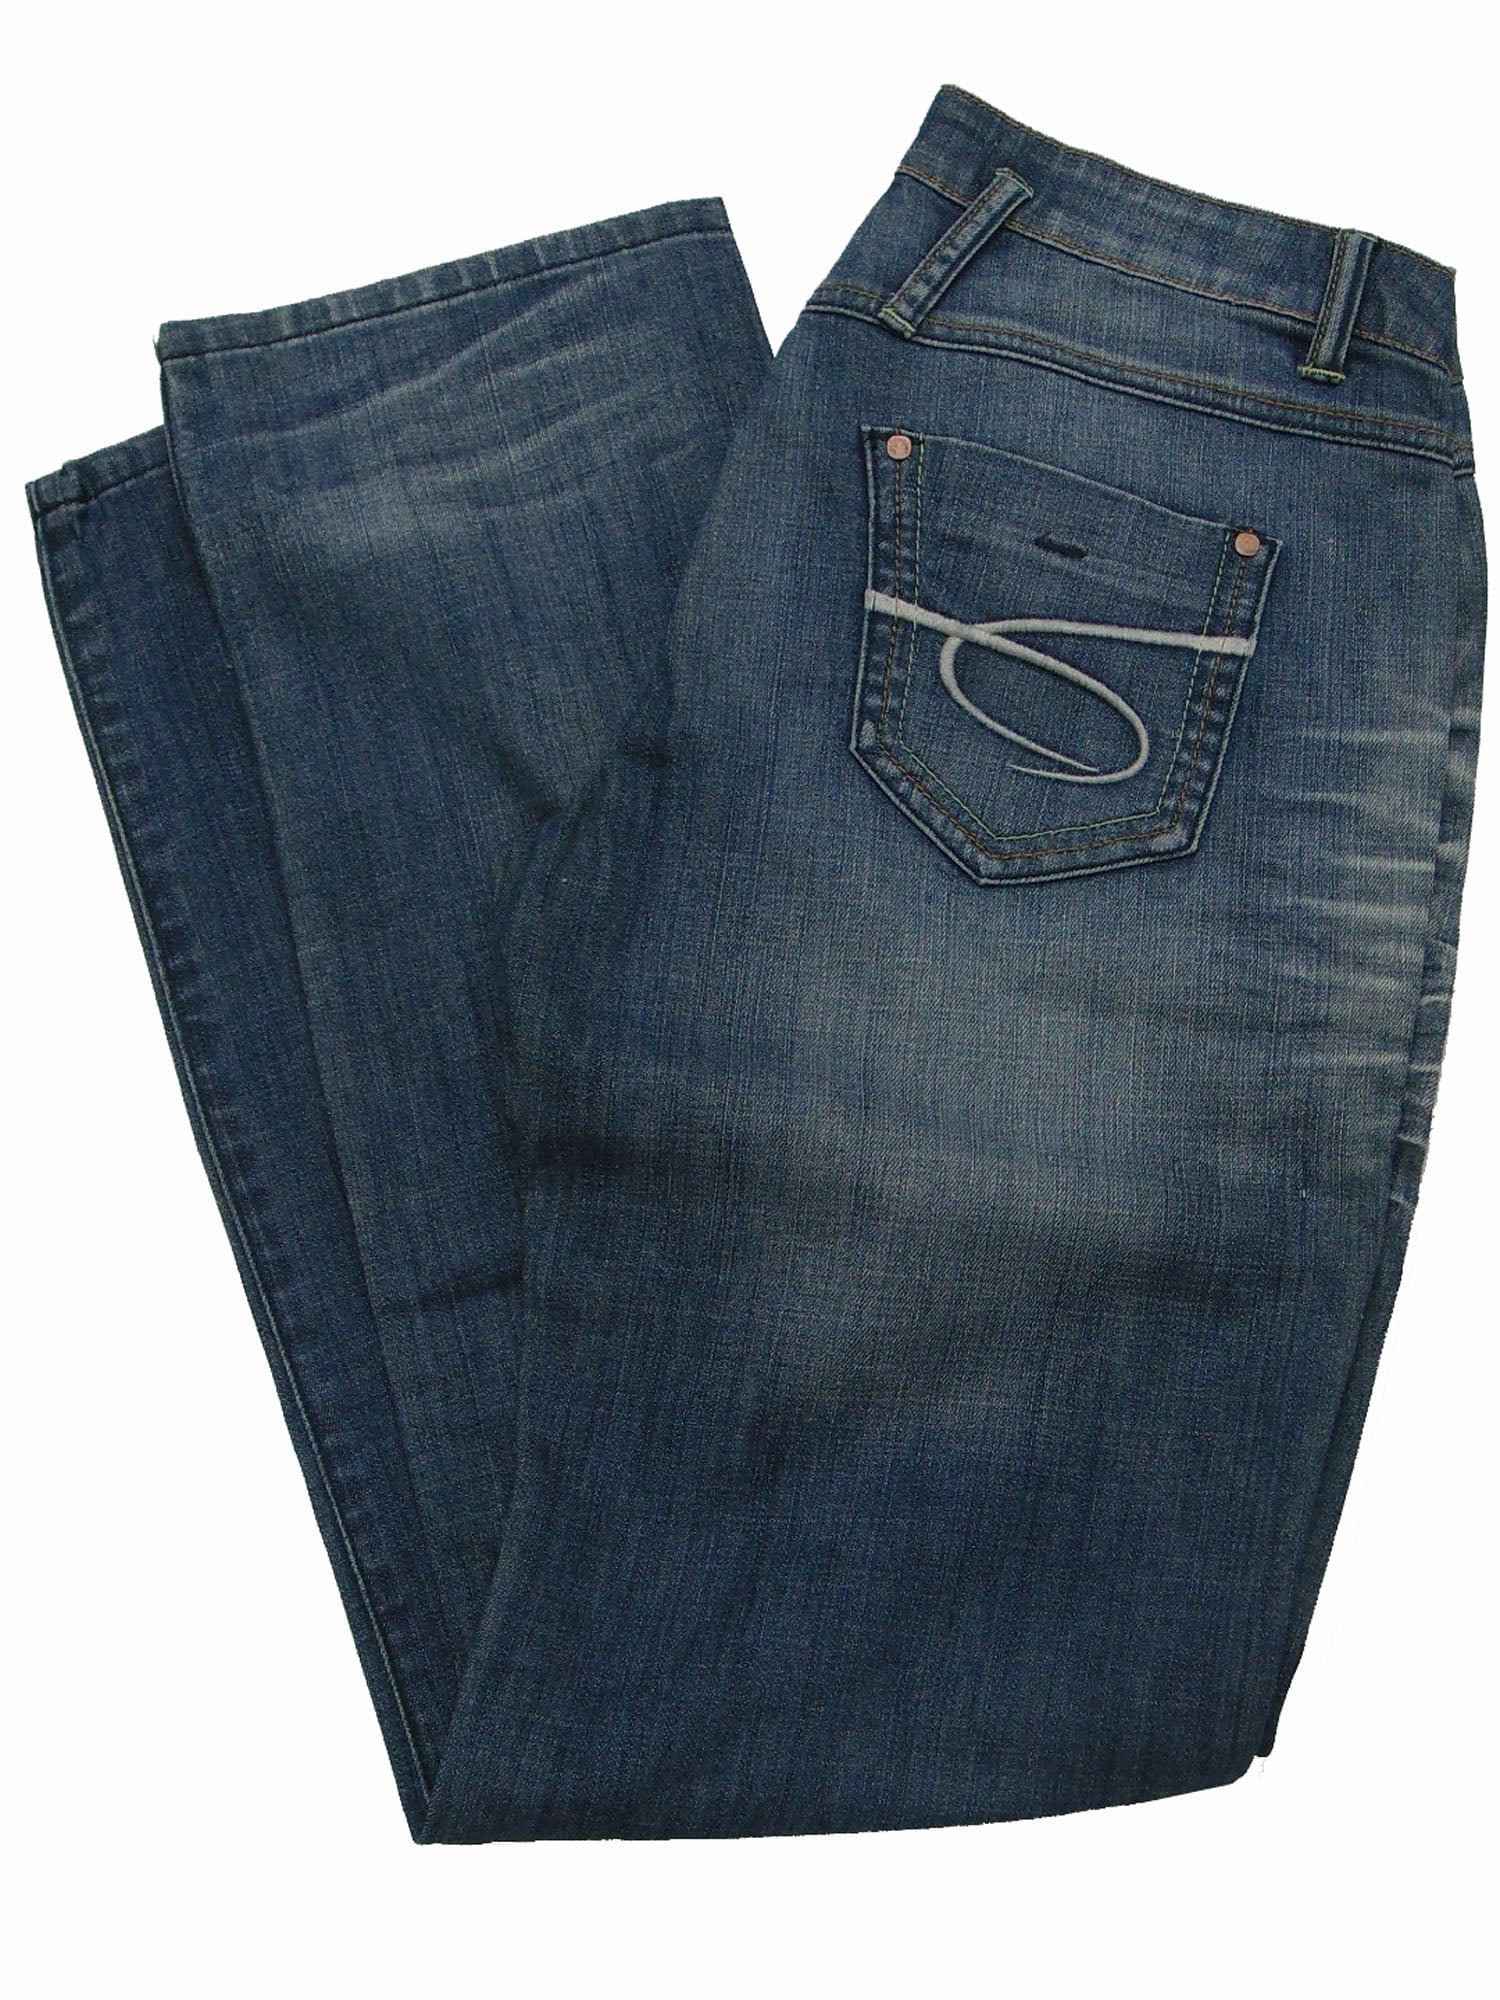 Men's Regular Fit Jeans 2269 BU (Jeans 30x33) - Walmart.com